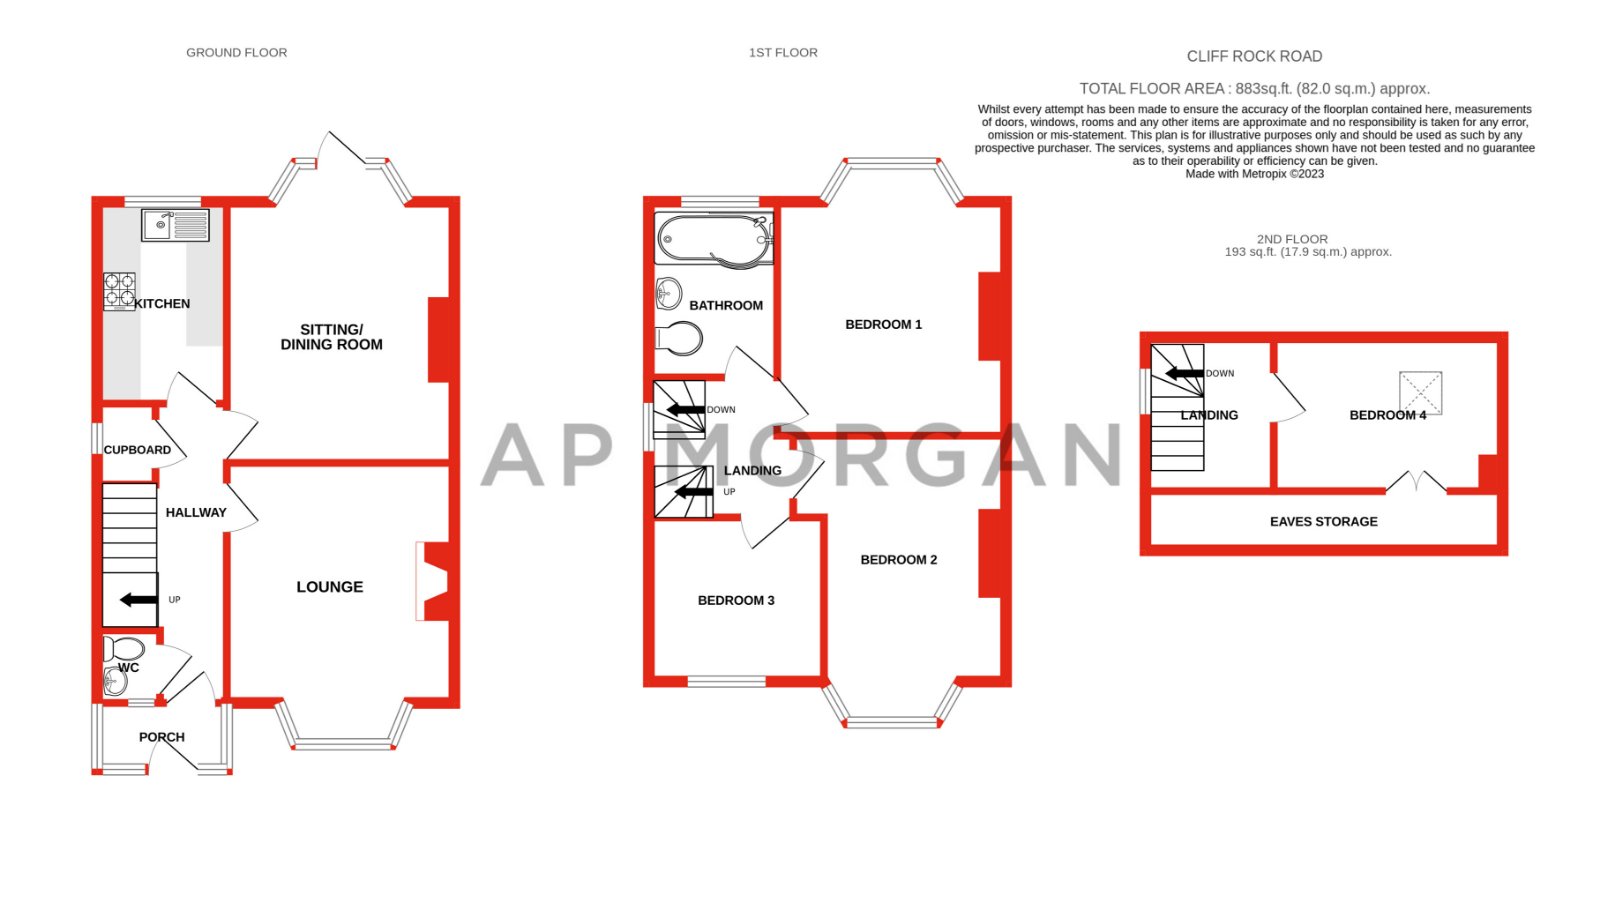 4 bed house for sale in Cliff Rock Road, Rednal - Property floorplan